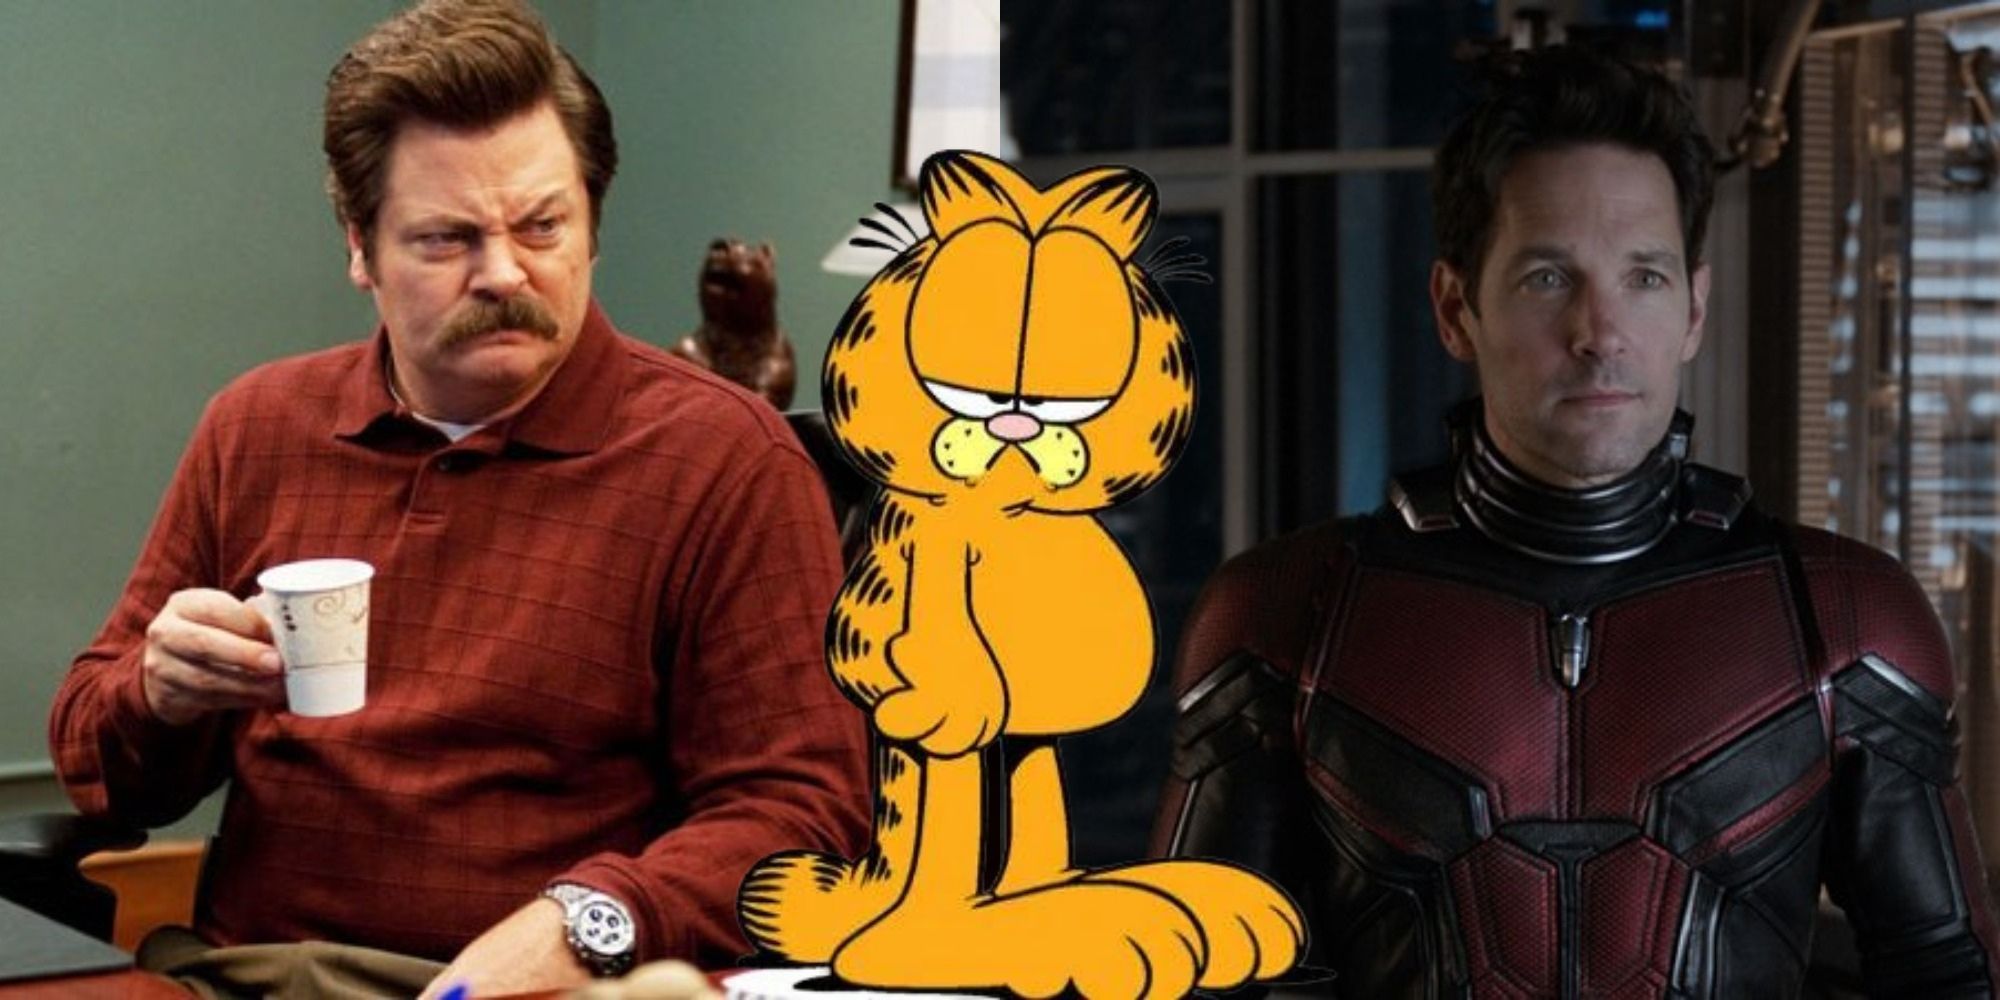 10 Actors Who Should Voice Garfield Instead Of Chris Pratt According To Reddit